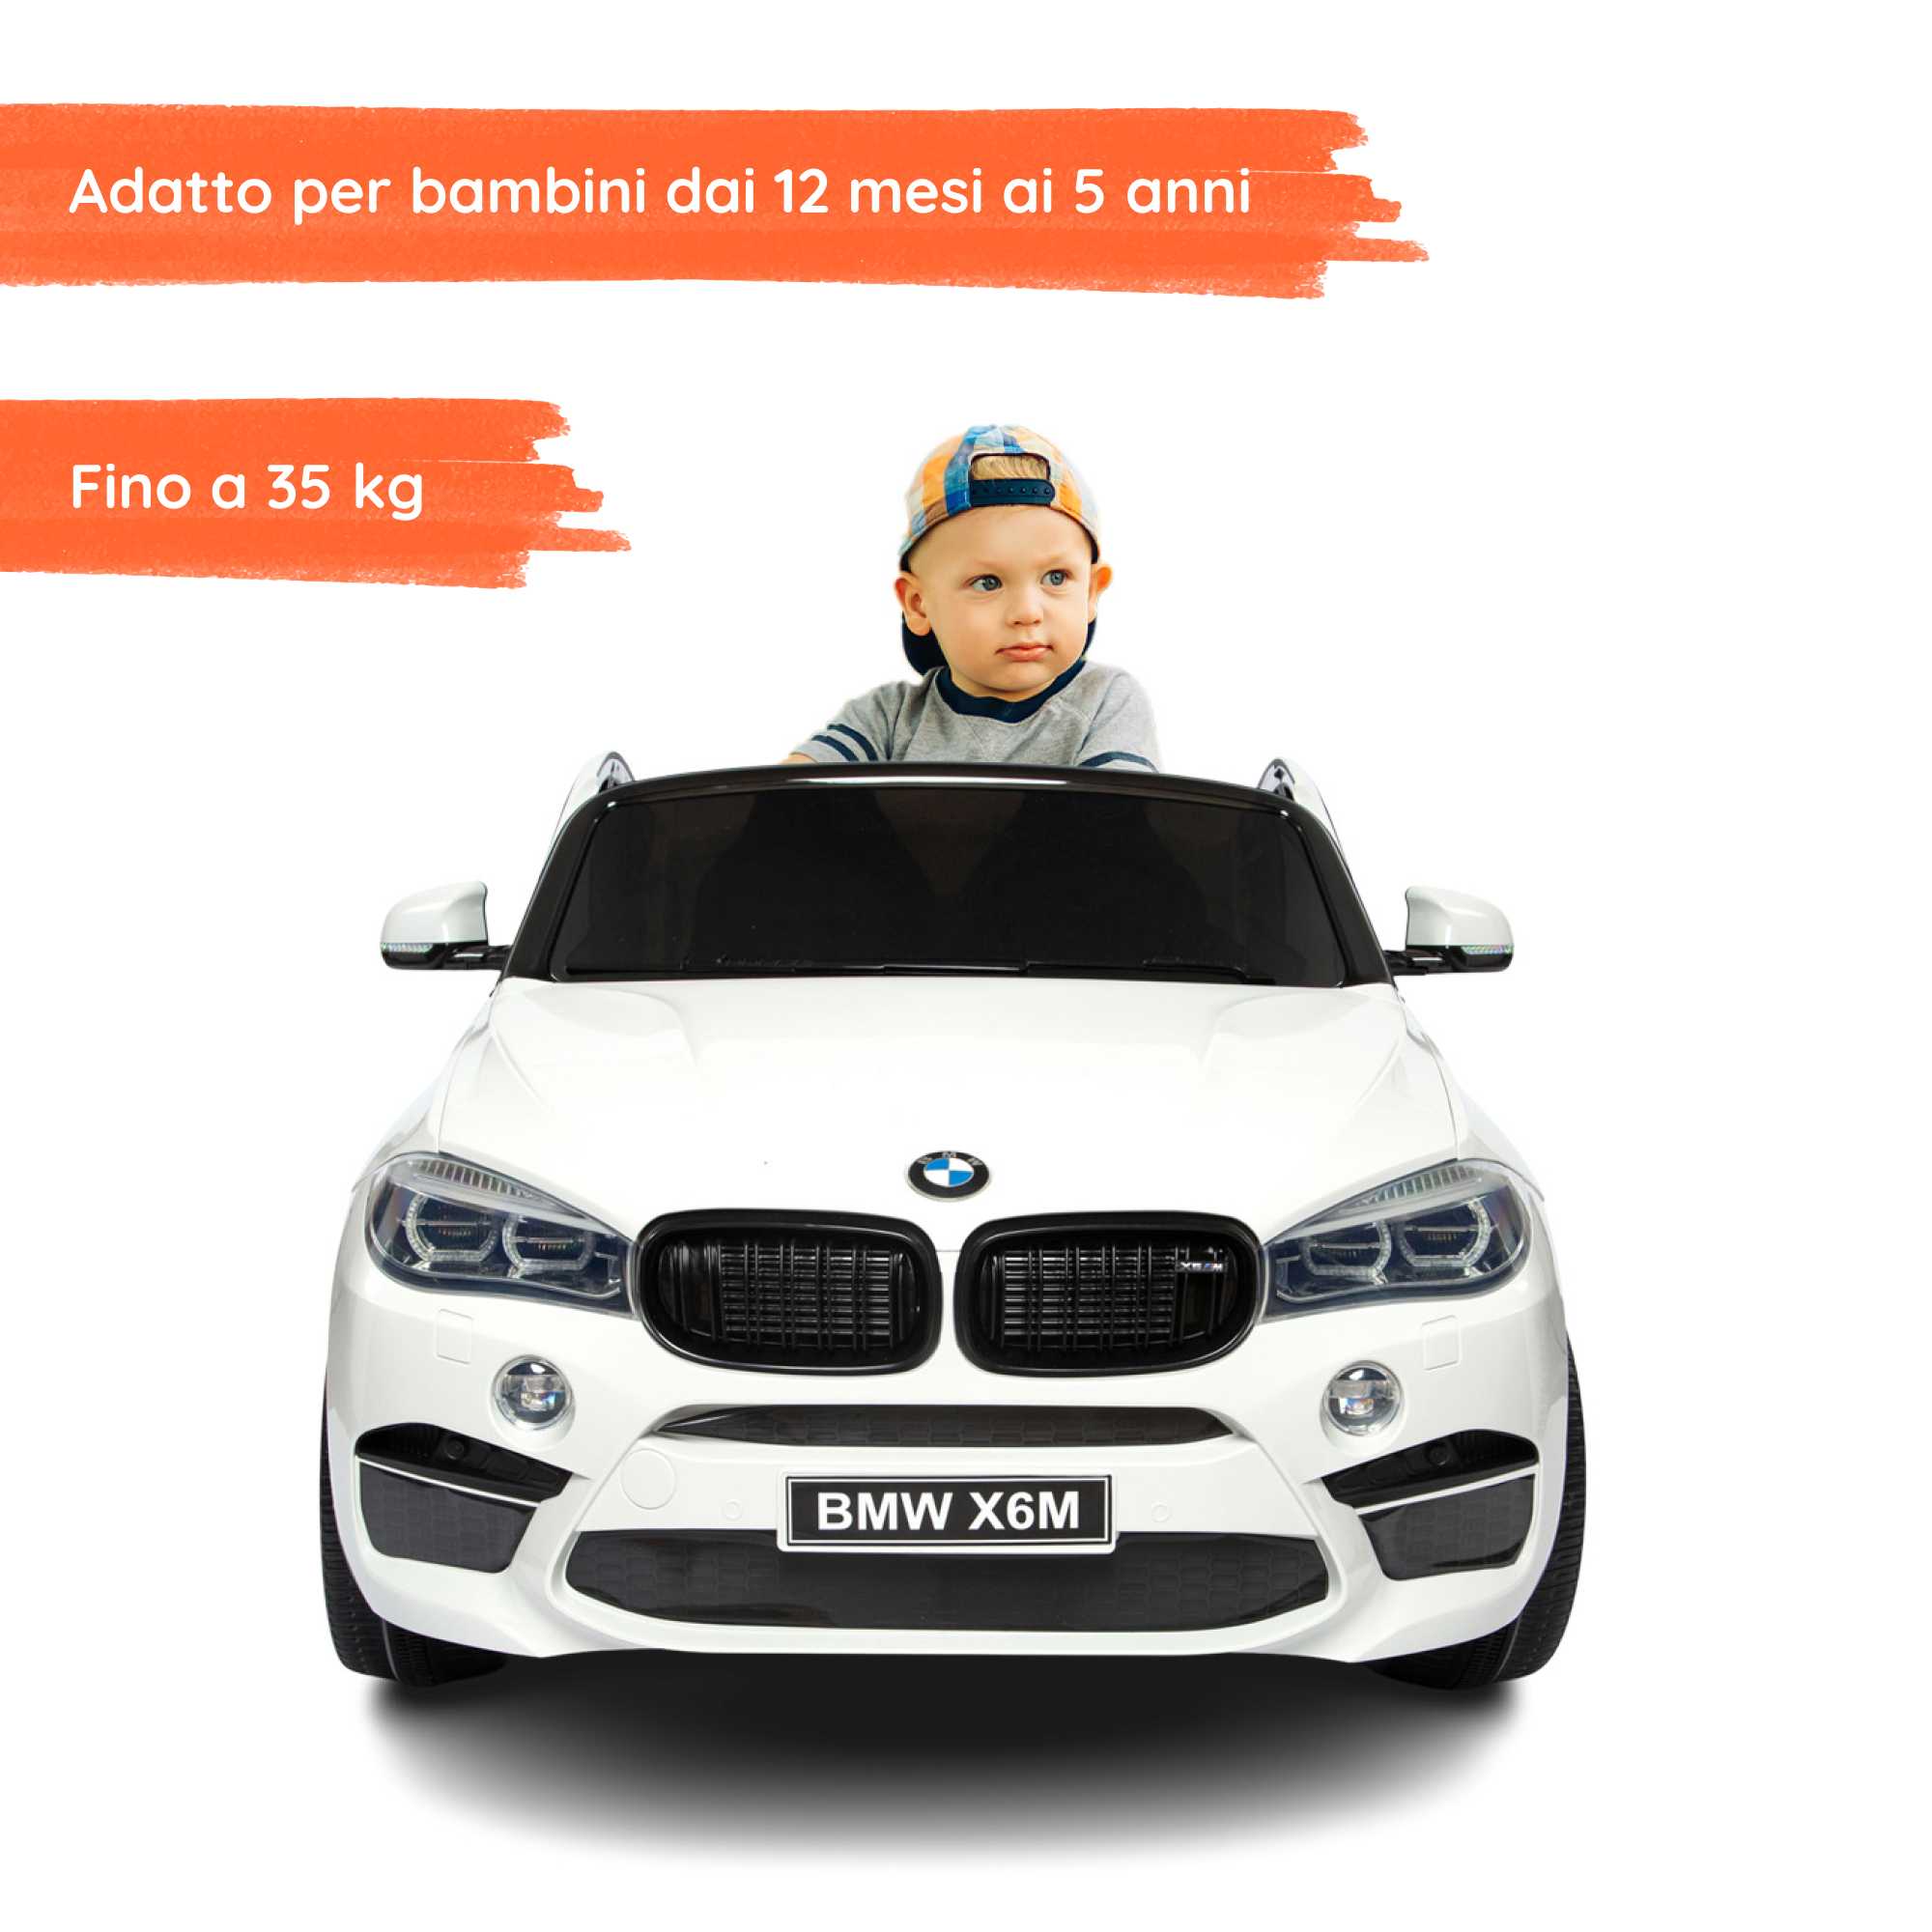 BMW X6 2P bianca con bambino